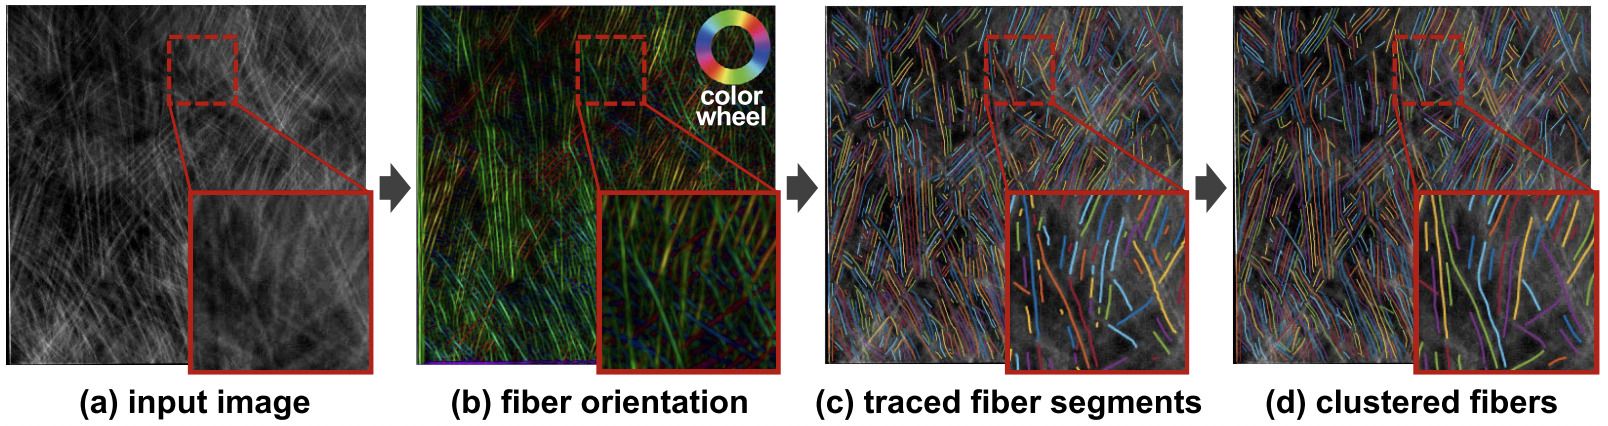 Image Based Measurement of Individual Fiber Lengths for Randomly Oriented Short Fiber Composites